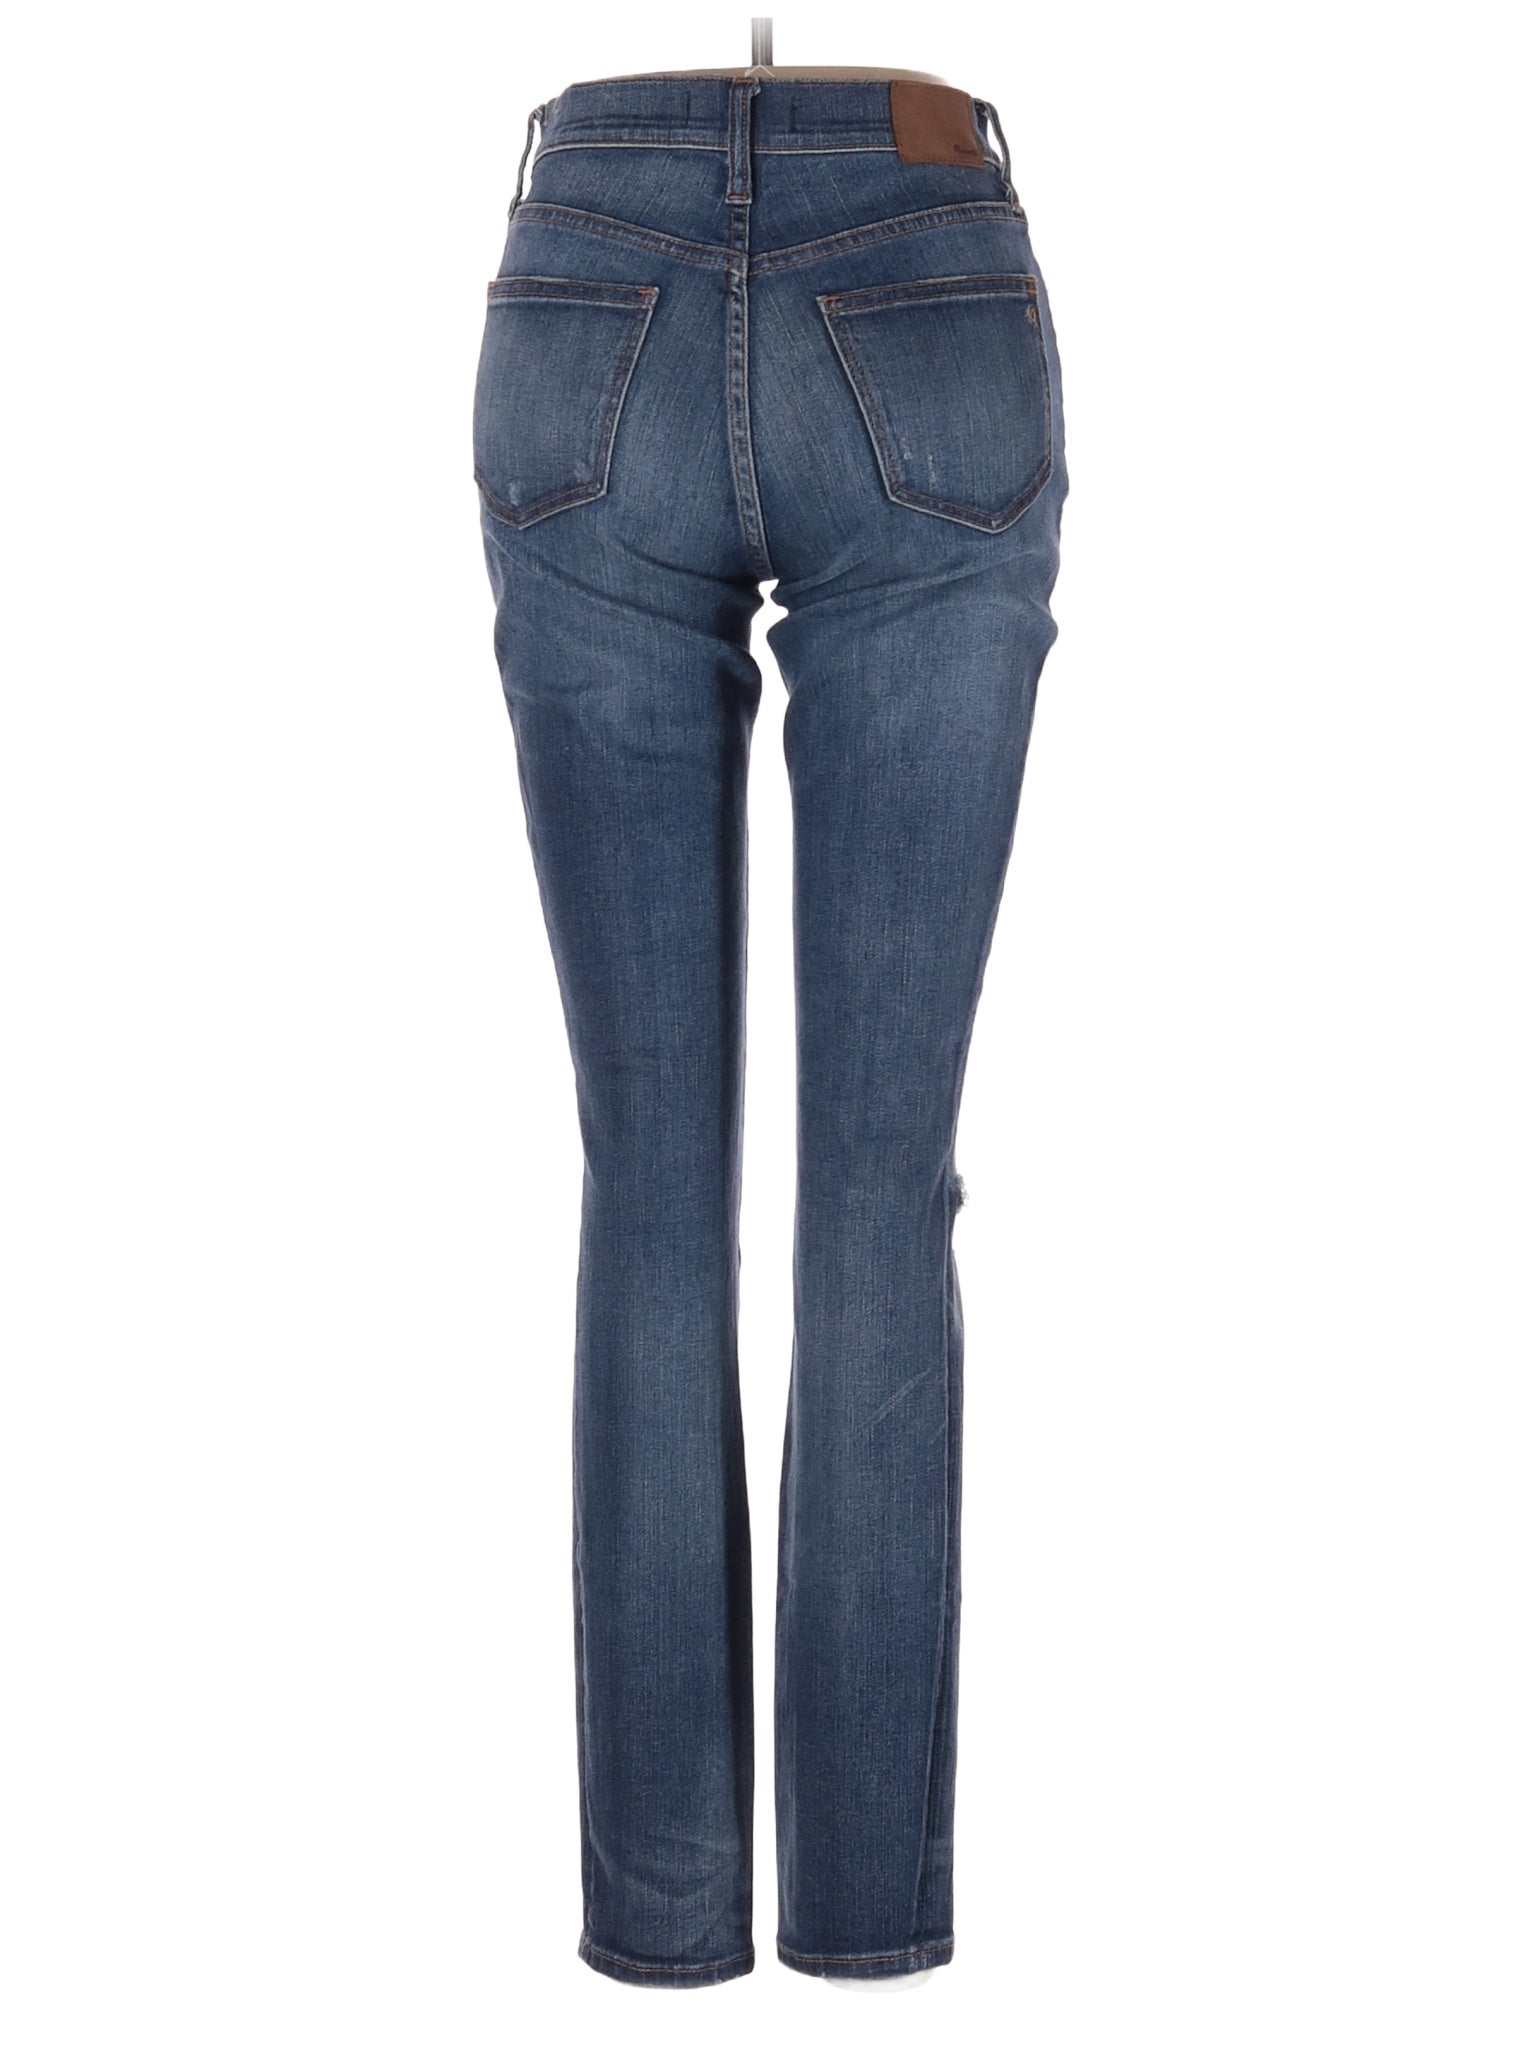 Mid-Rise Skinny Jeans in Dark Wash waist size - 27